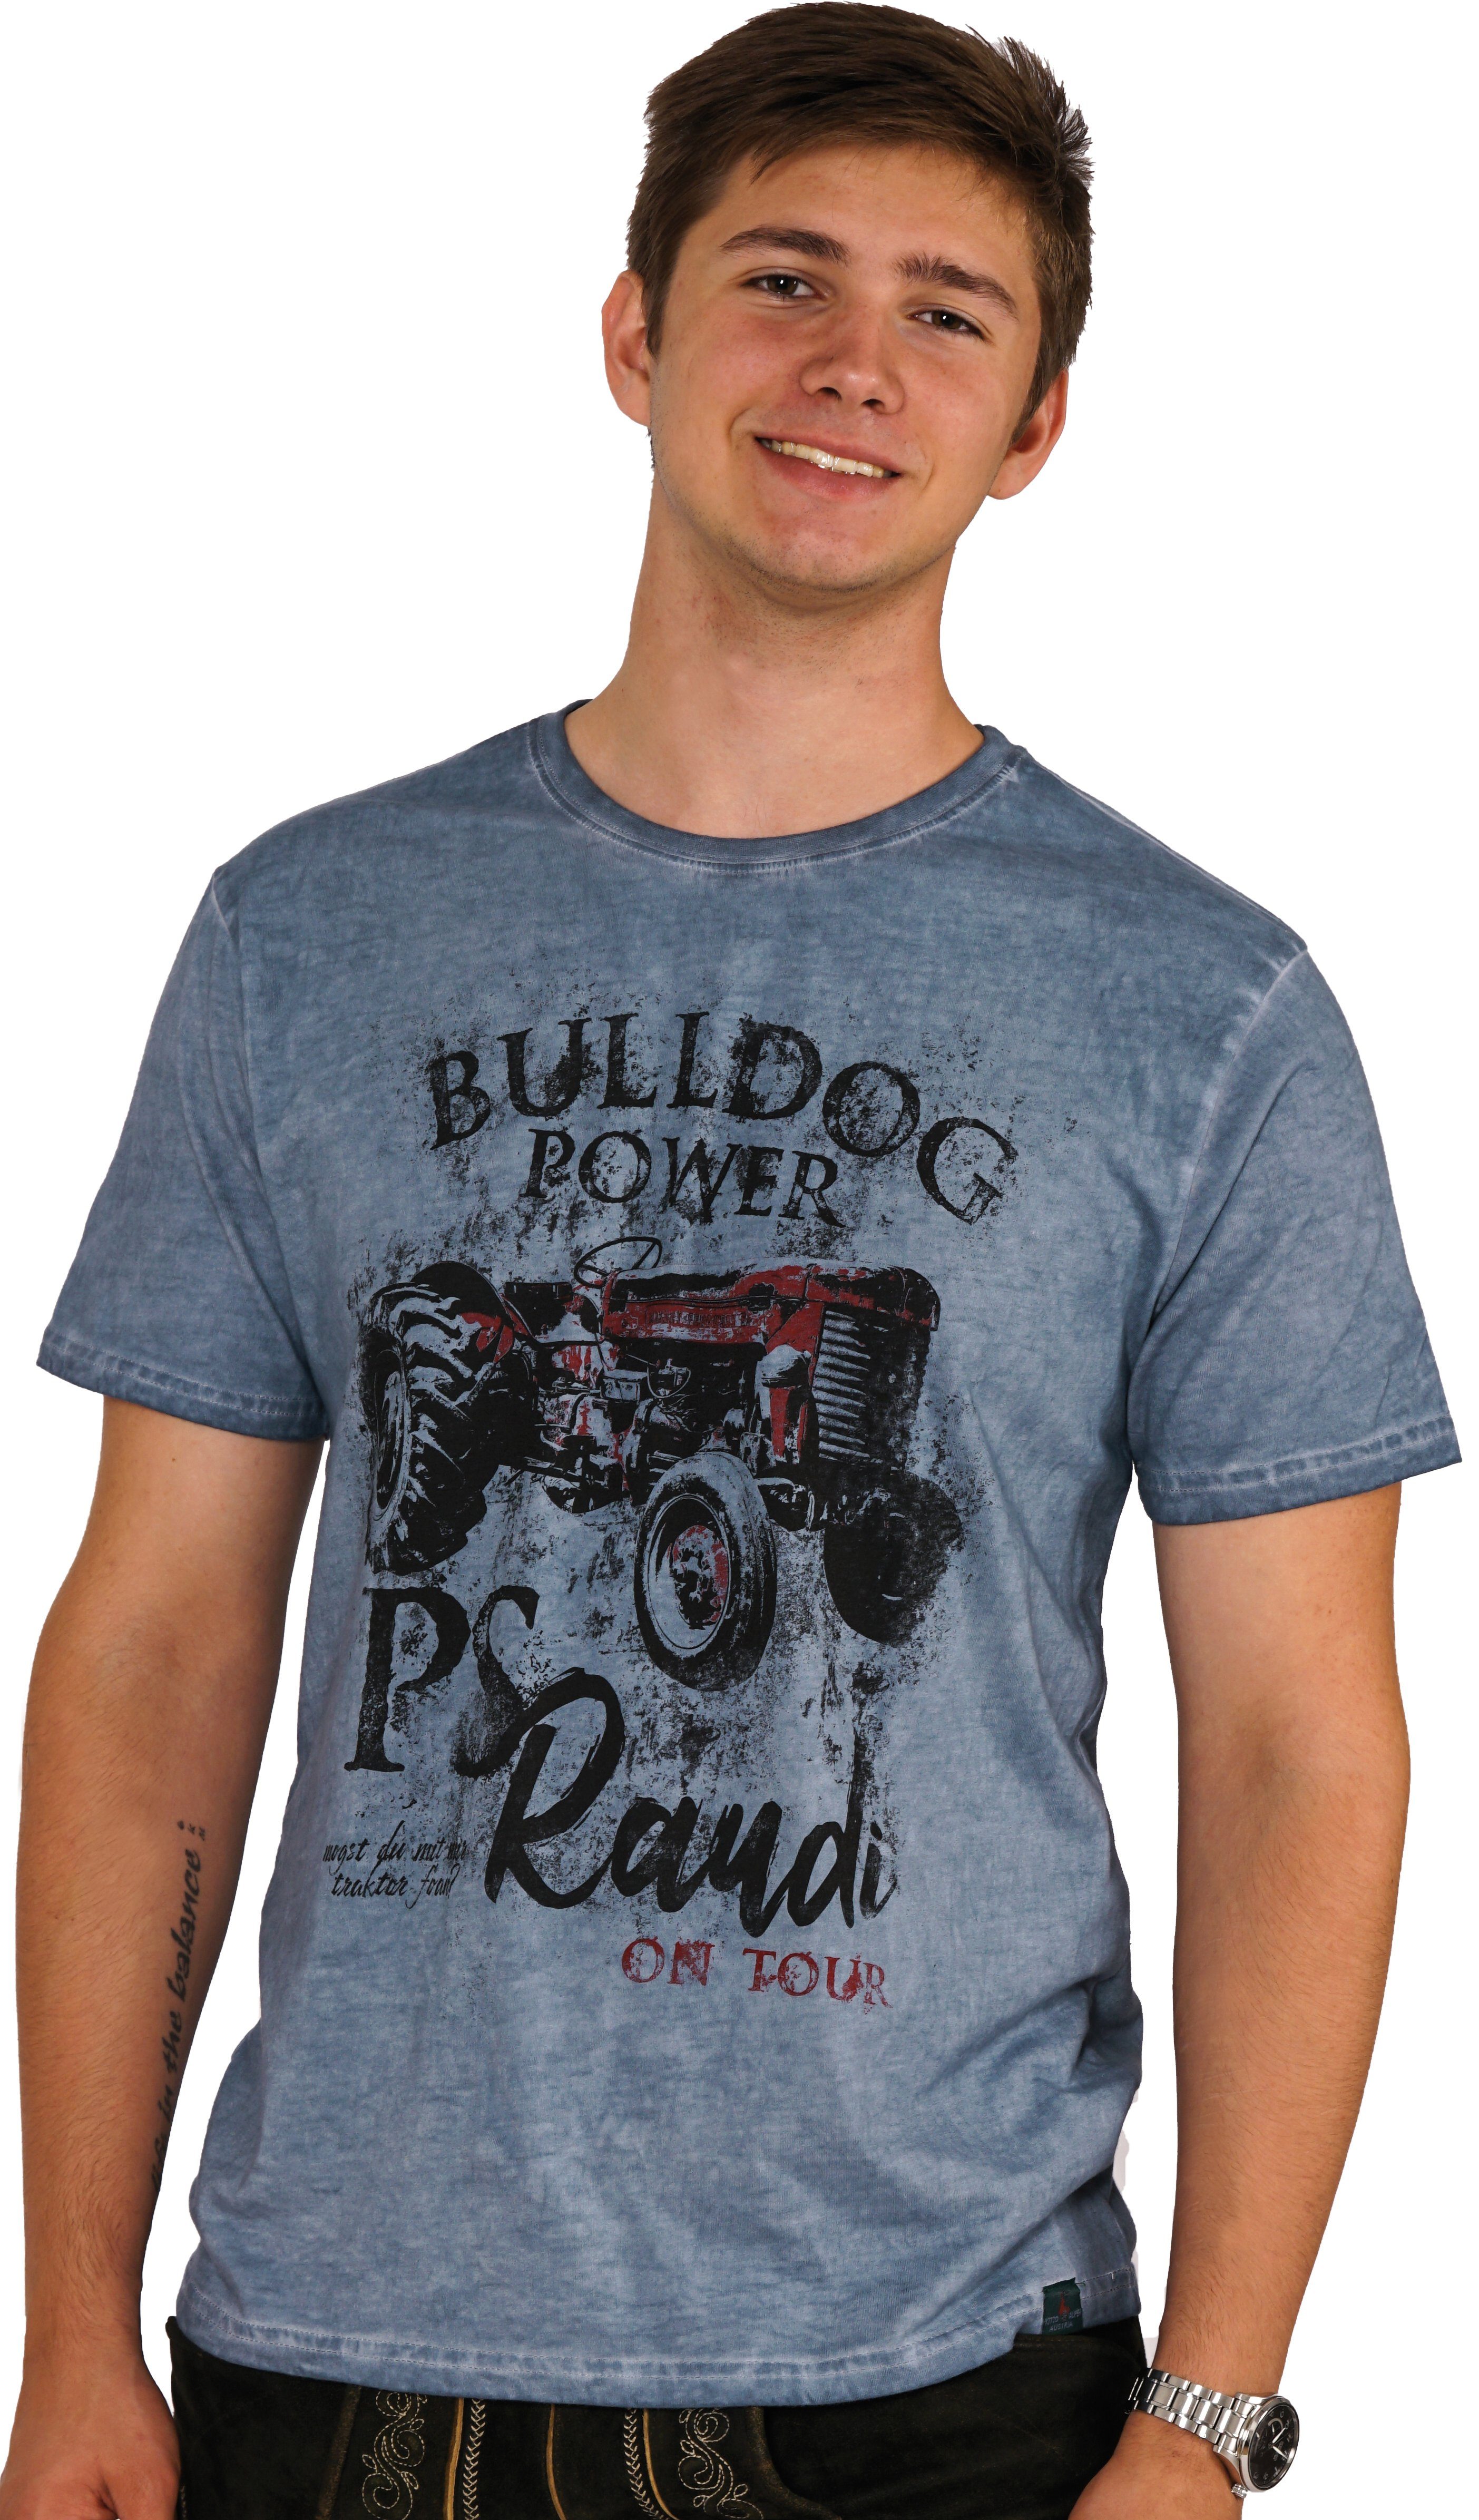 Tour Trachtenshirt Power Bulldog Soreso® PS on Blau Raudi